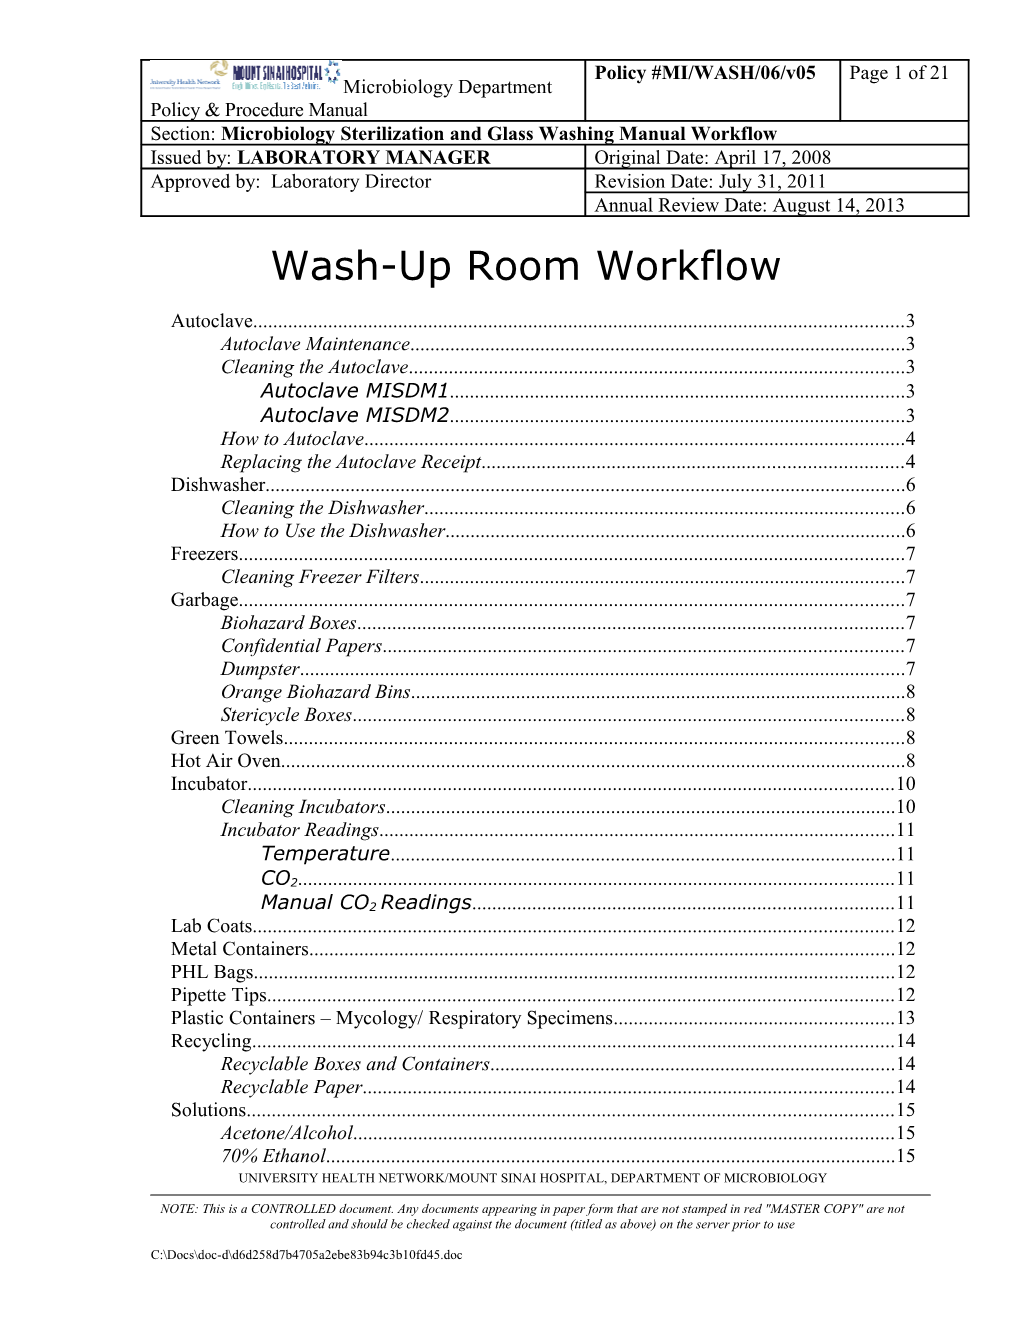 Wash-Up Room Workflow